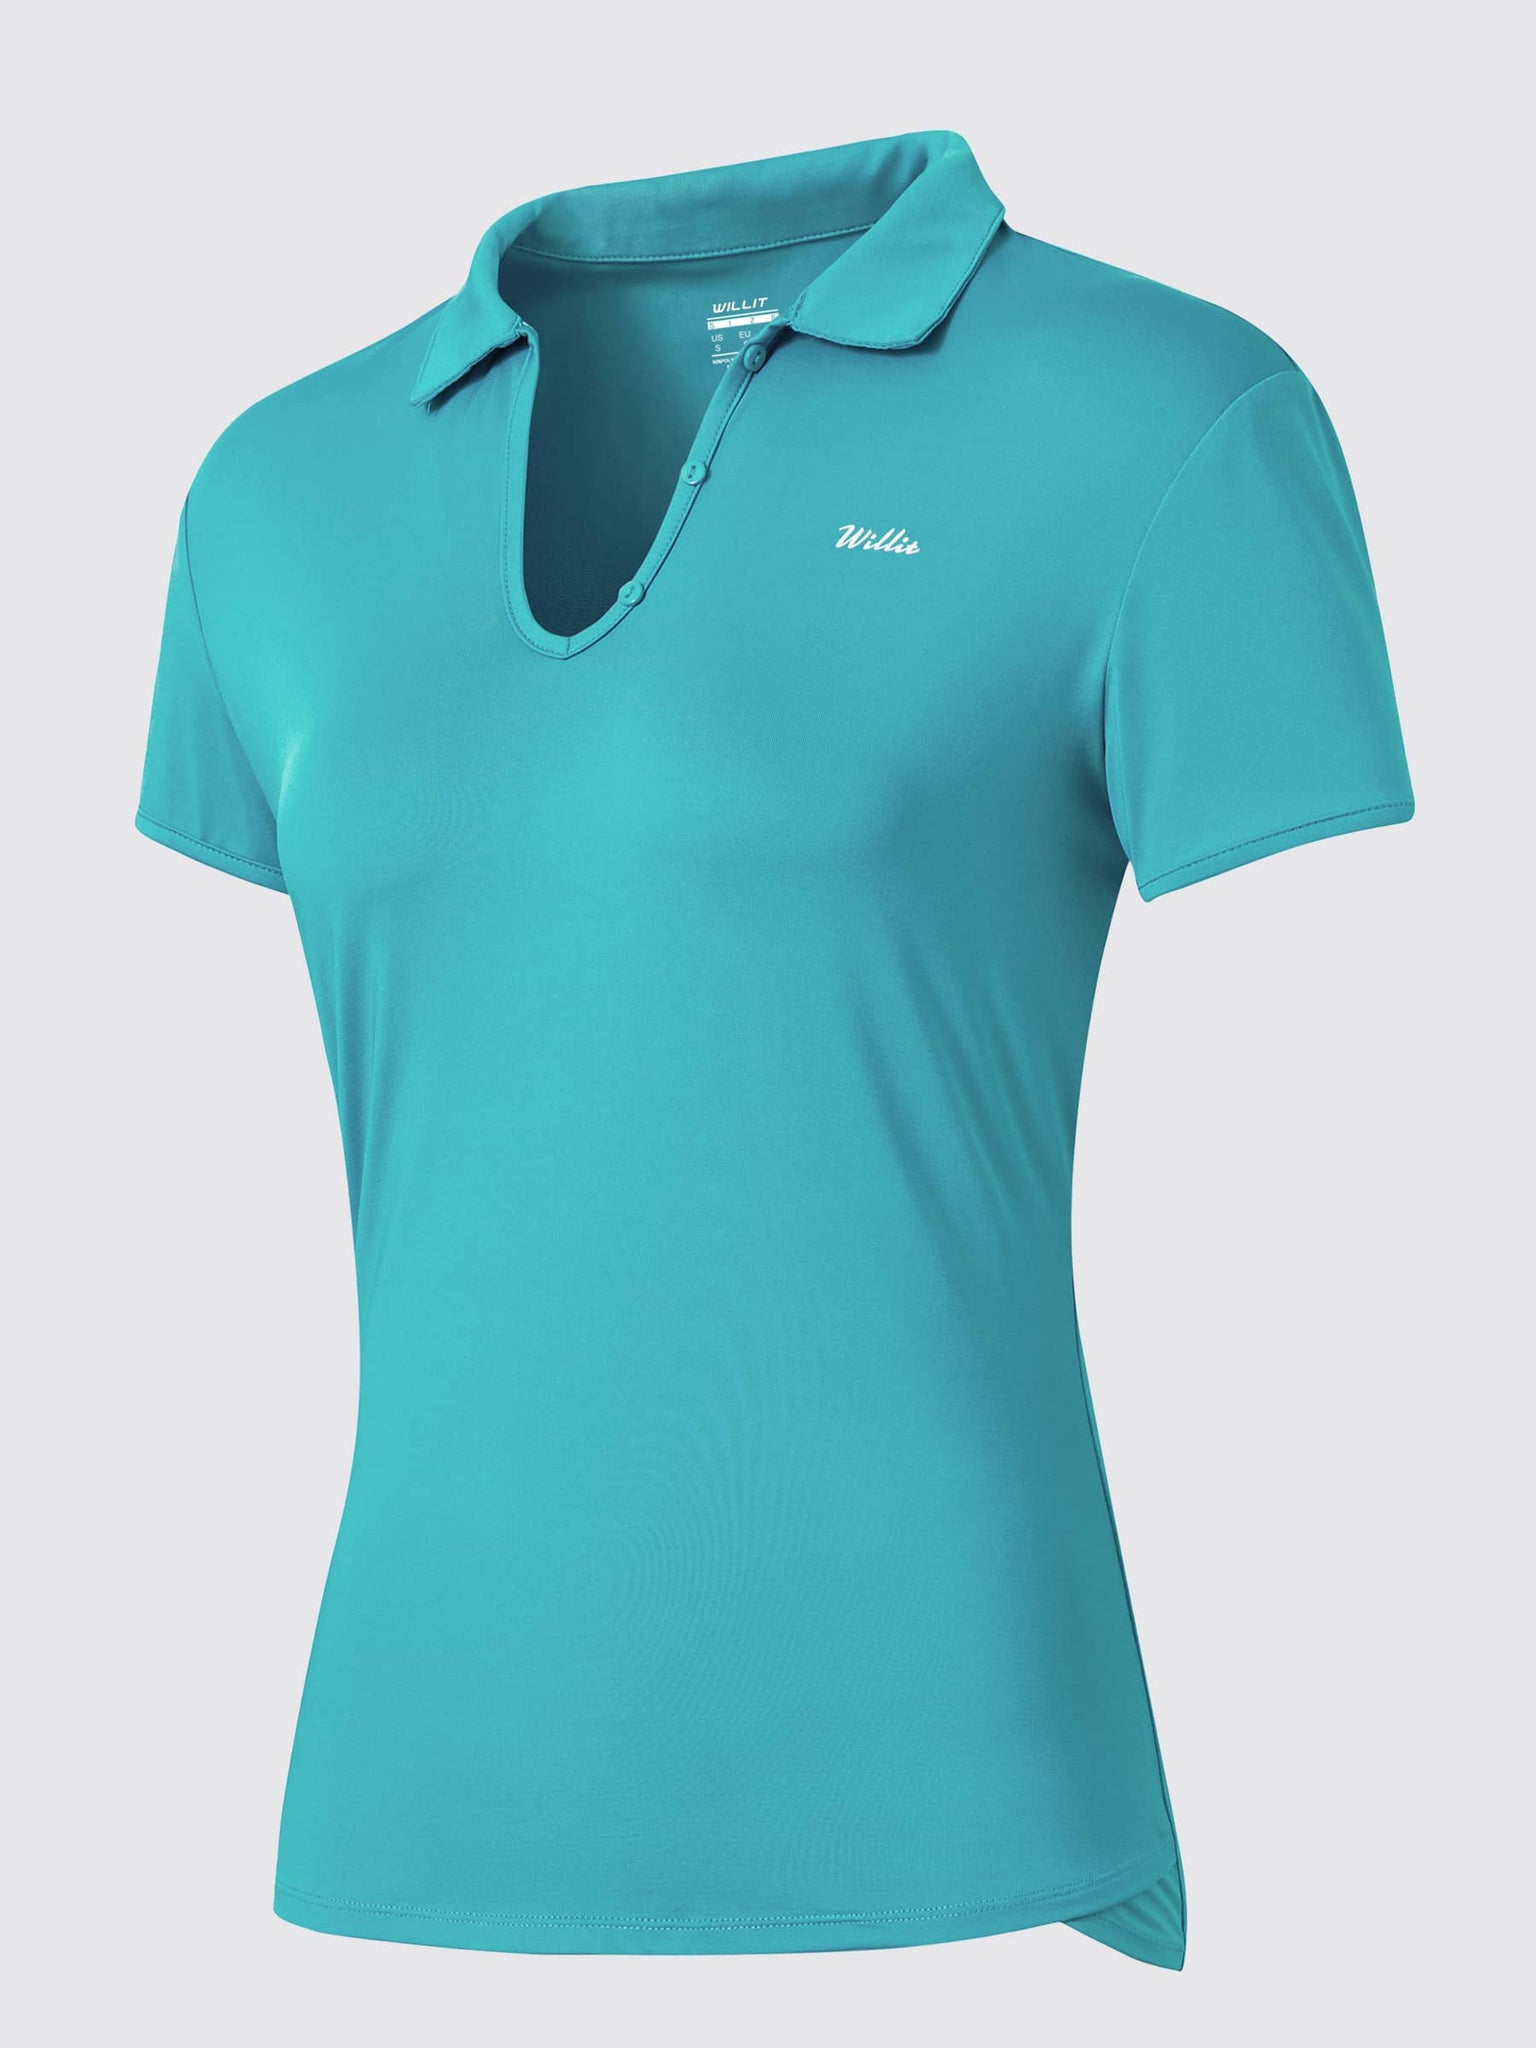 Willit Women's Golf Polo Short Sleeve Shirts_Aqua2